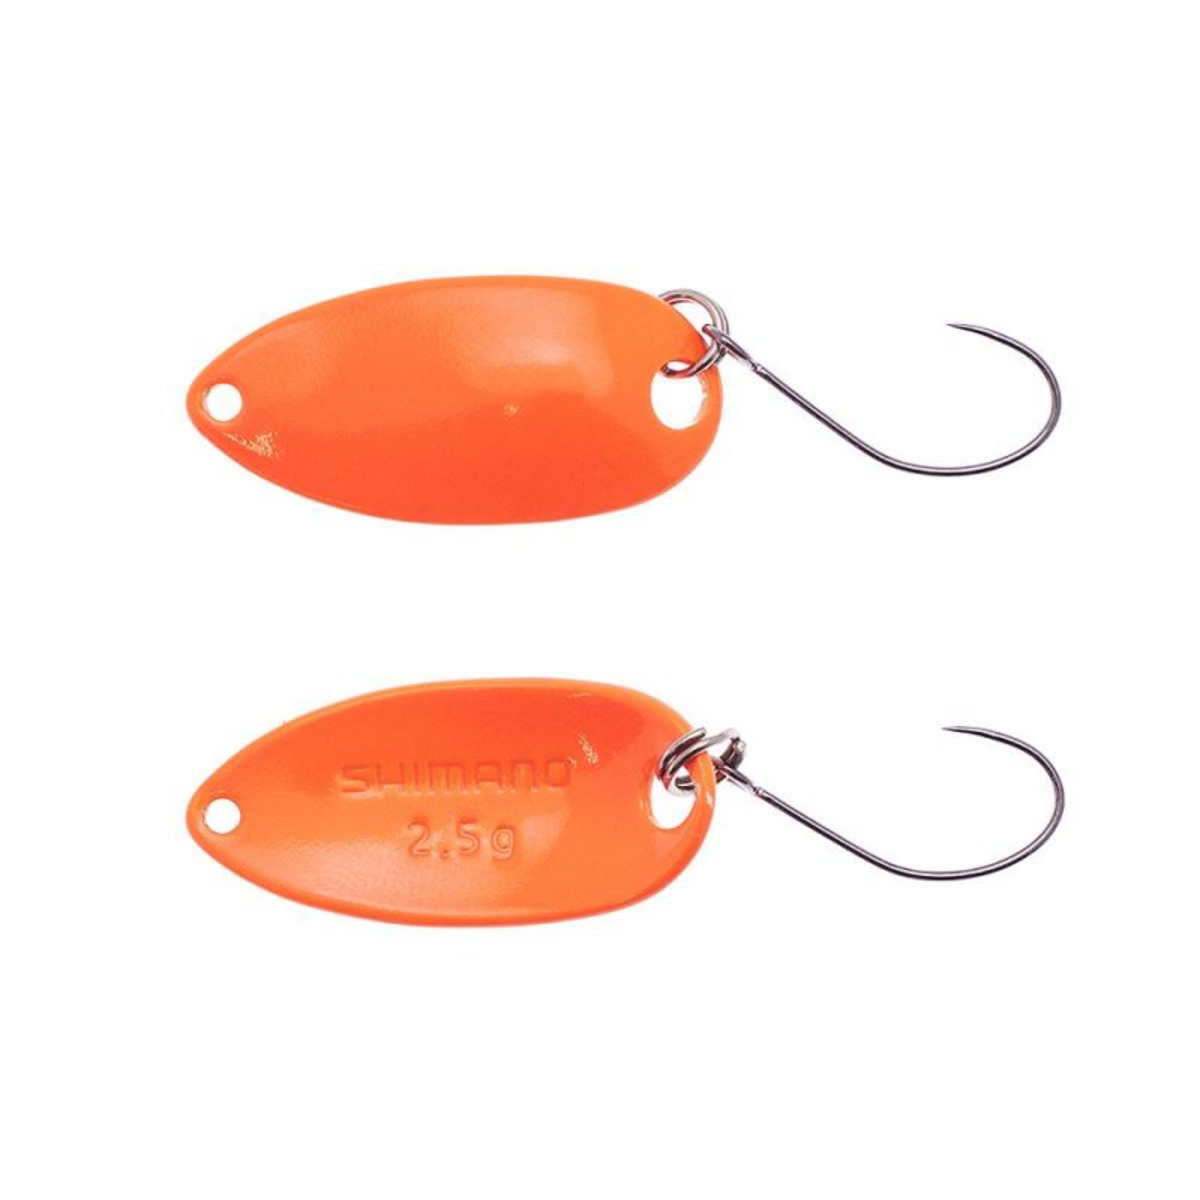 Shimano Cardiff Roll Swimmer - 1.8 g - Orange